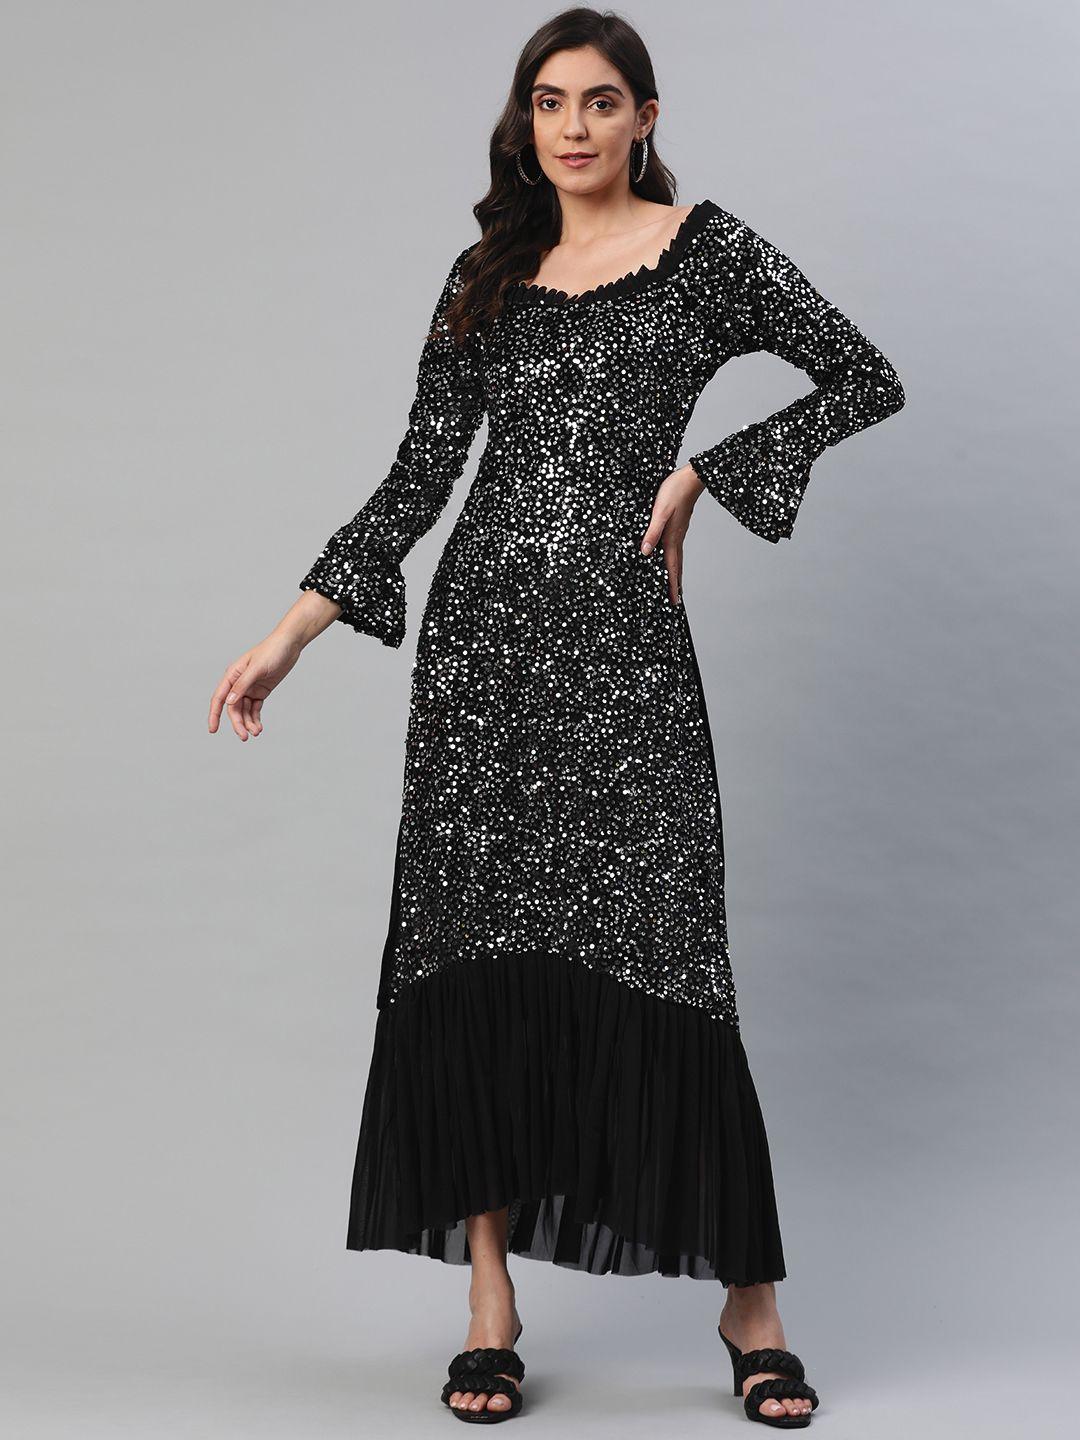 aarika women silver & black embellished velvet maxi dress